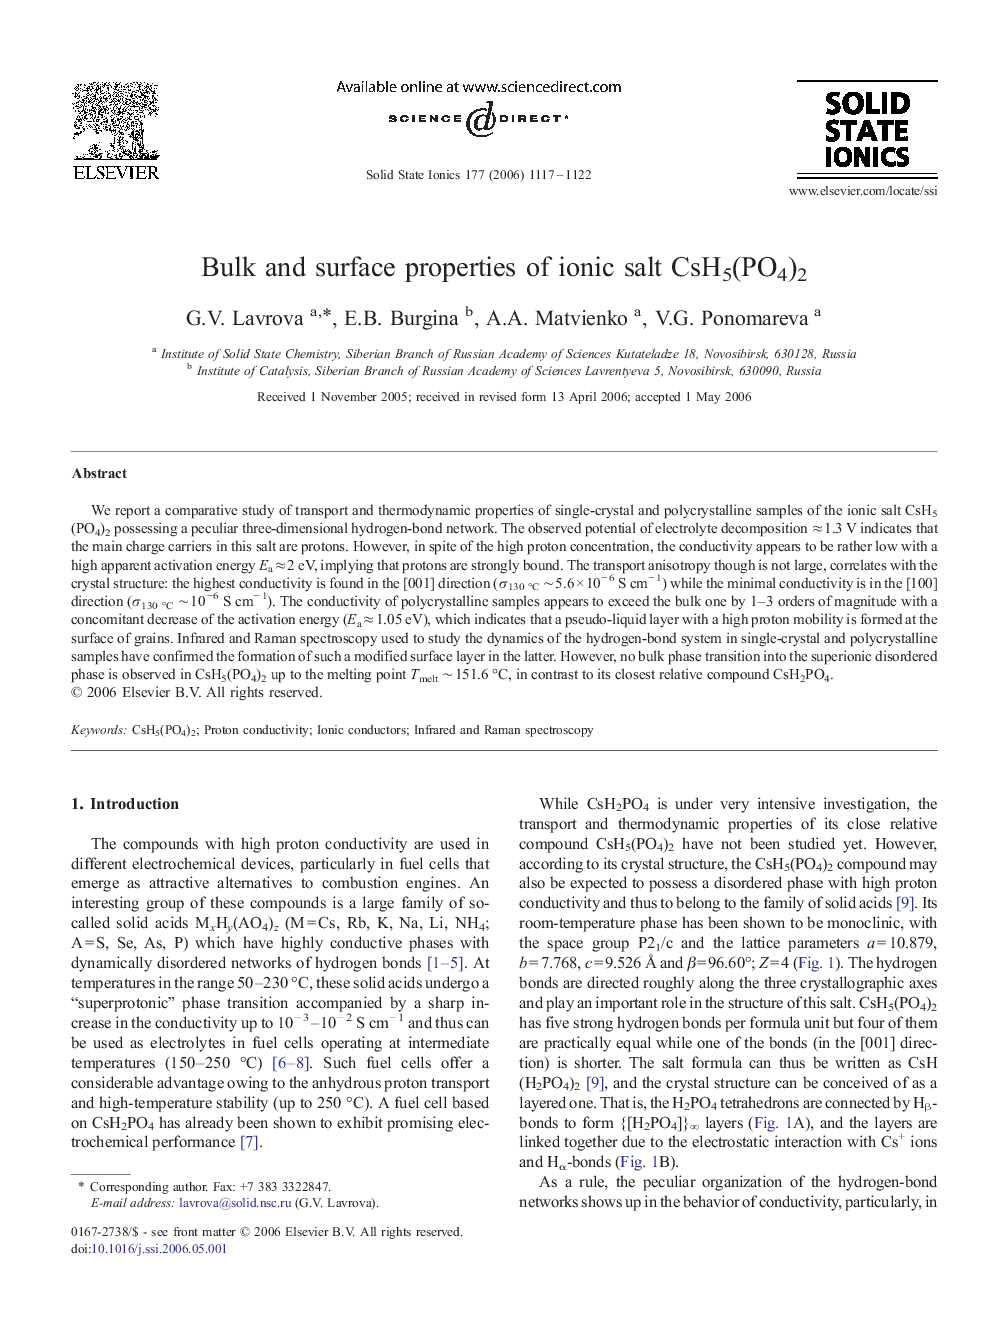 Bulk and surface properties of ionic salt CsH5(PO4)2